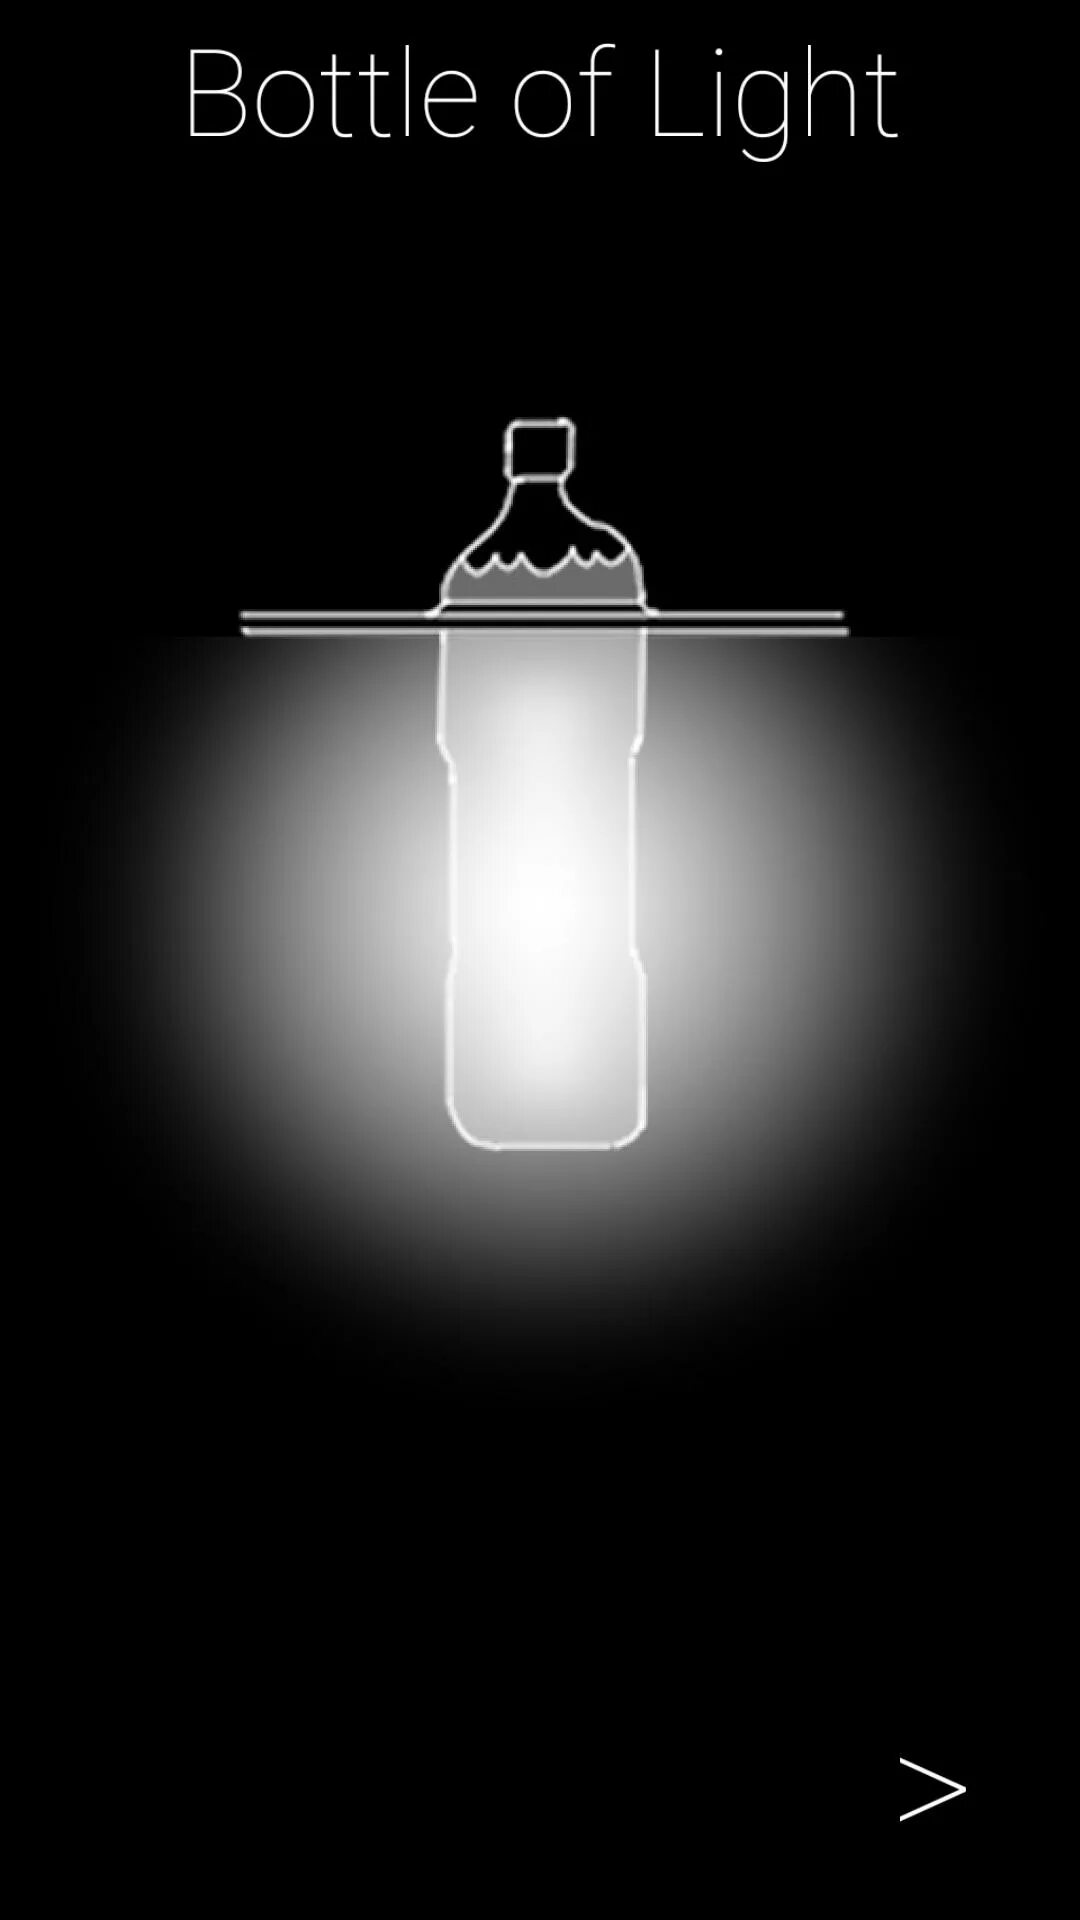 Бутылочка на андроид. Литр света лампа Мозера. Litre of Light. Свет из бутылки с водой. Дневной флакон света.